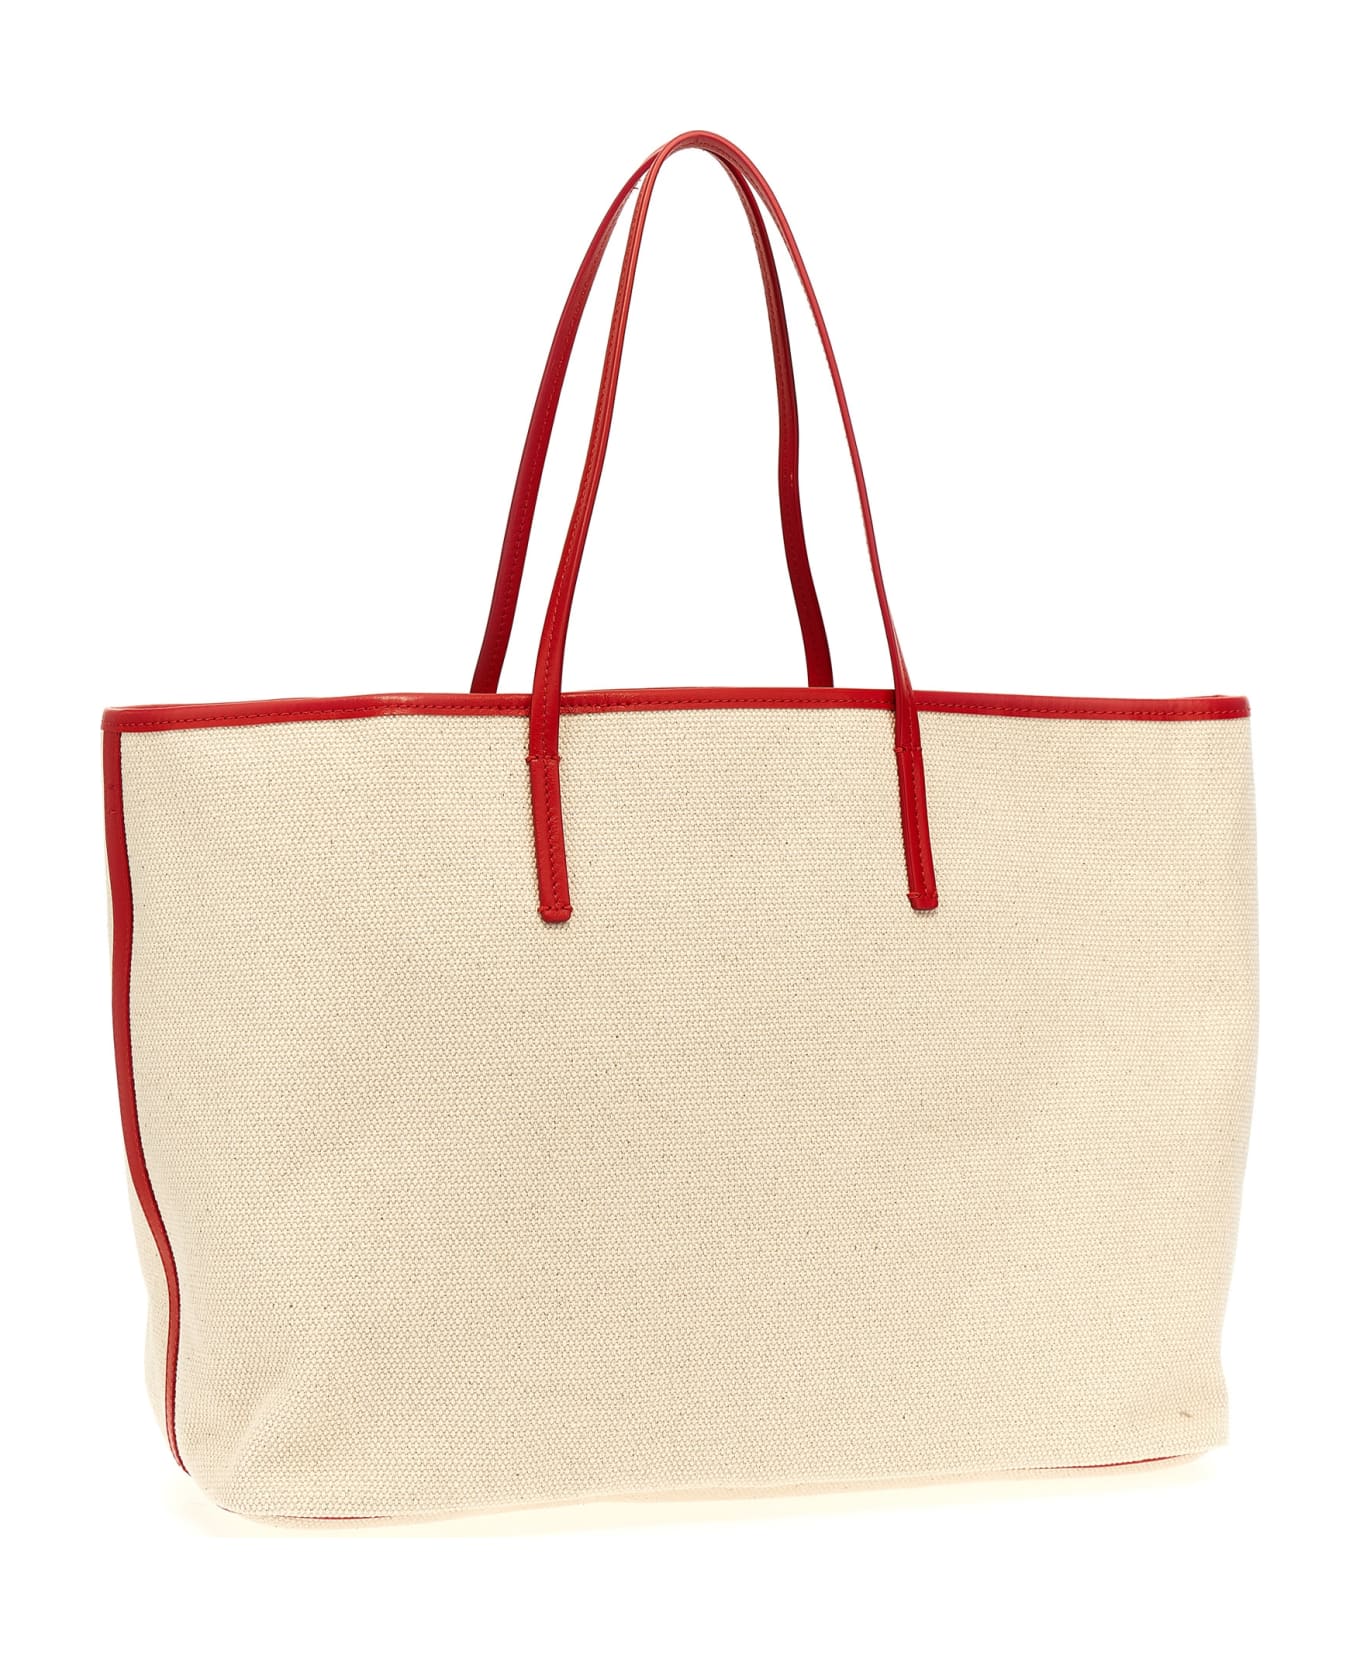 Marni Logo Canvas Shopping Bag - Multicolor トートバッグ